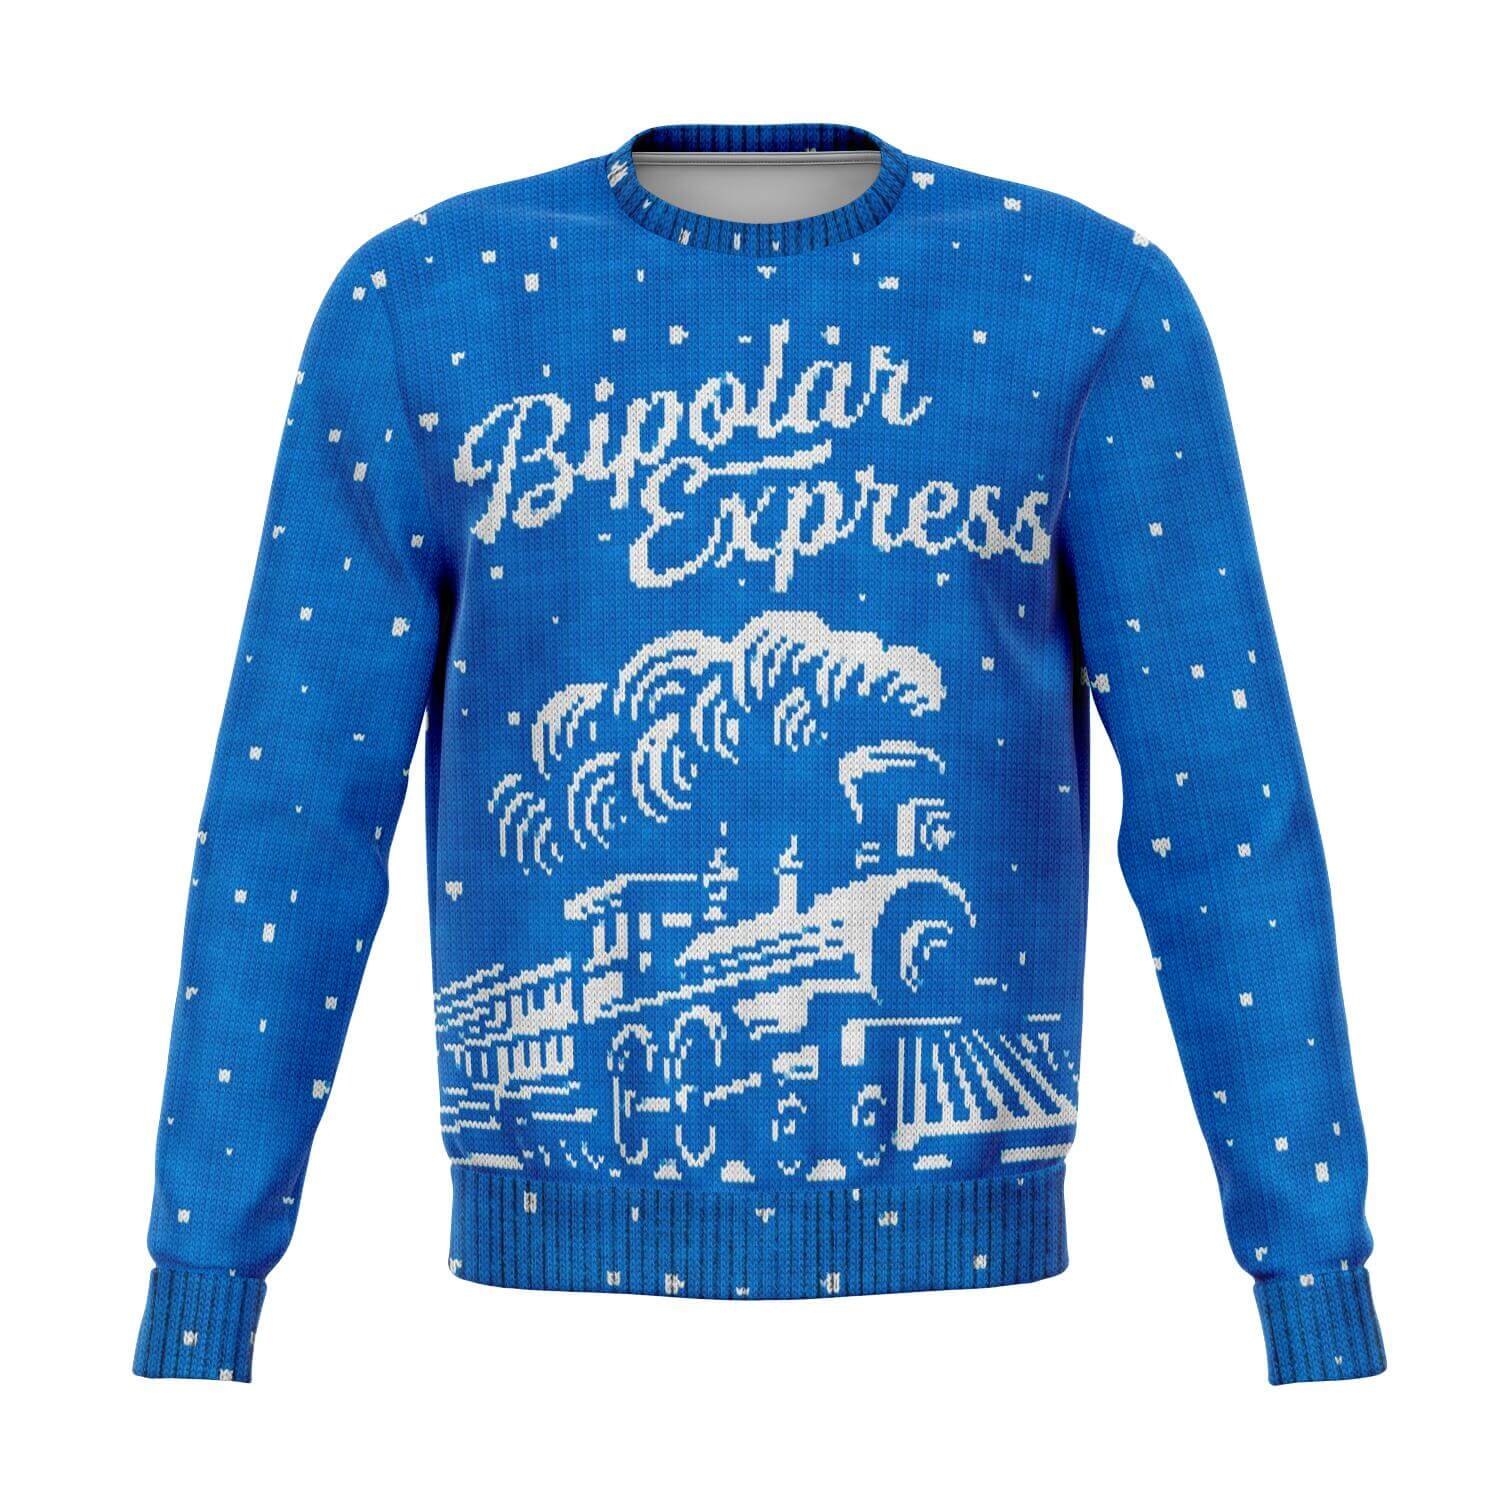 Fun Xmas Sweater - BiPolar Express-sweatshirt-front